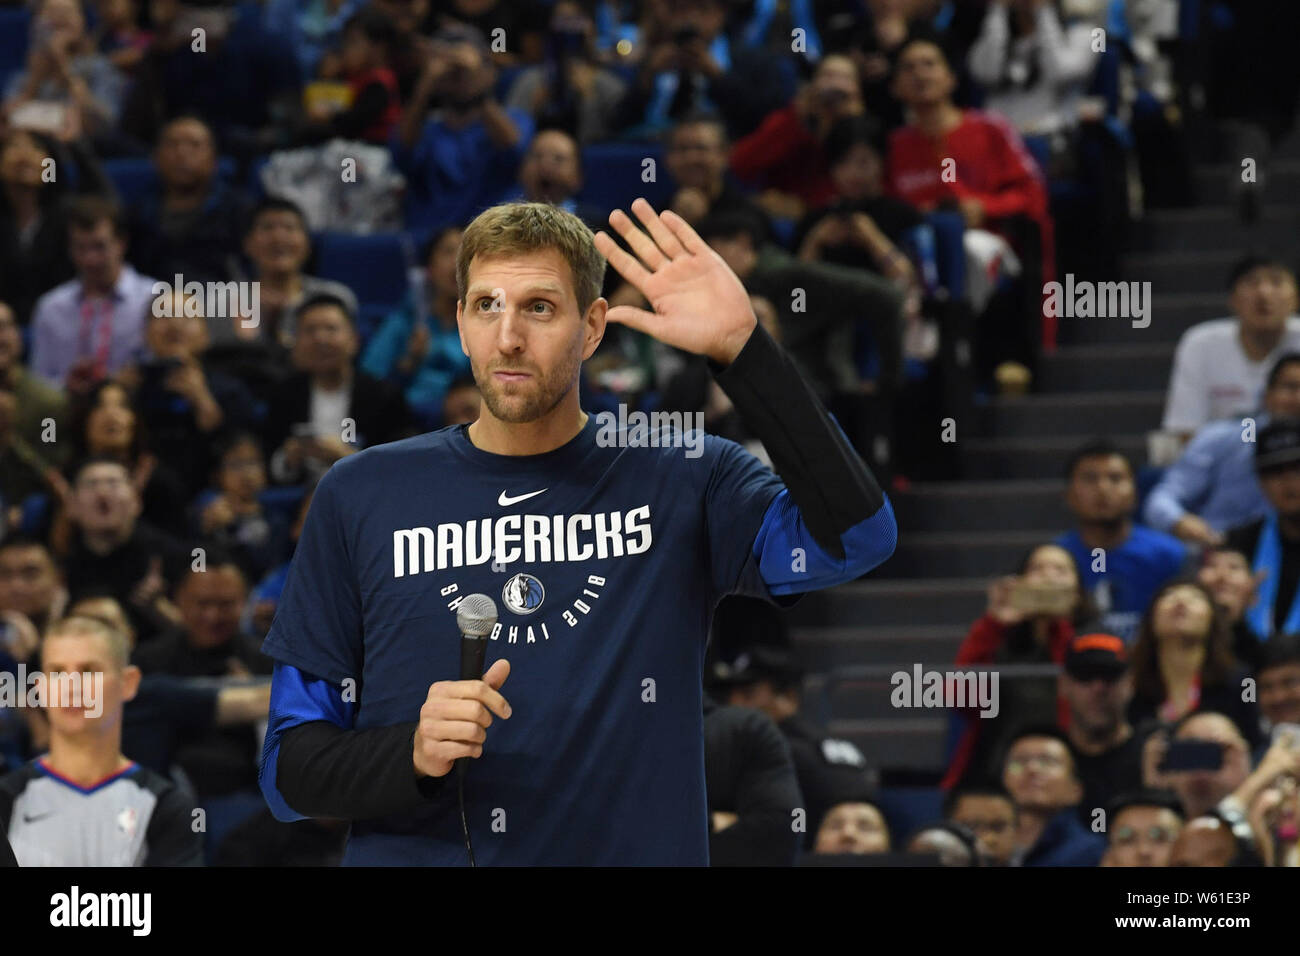 Dirk Nowitzki of Dallas Mavericks waves to spectators before the Shanghai match of the NBA China Games between Dallas Mavericks and Philadelphia 76ers Stock Photo